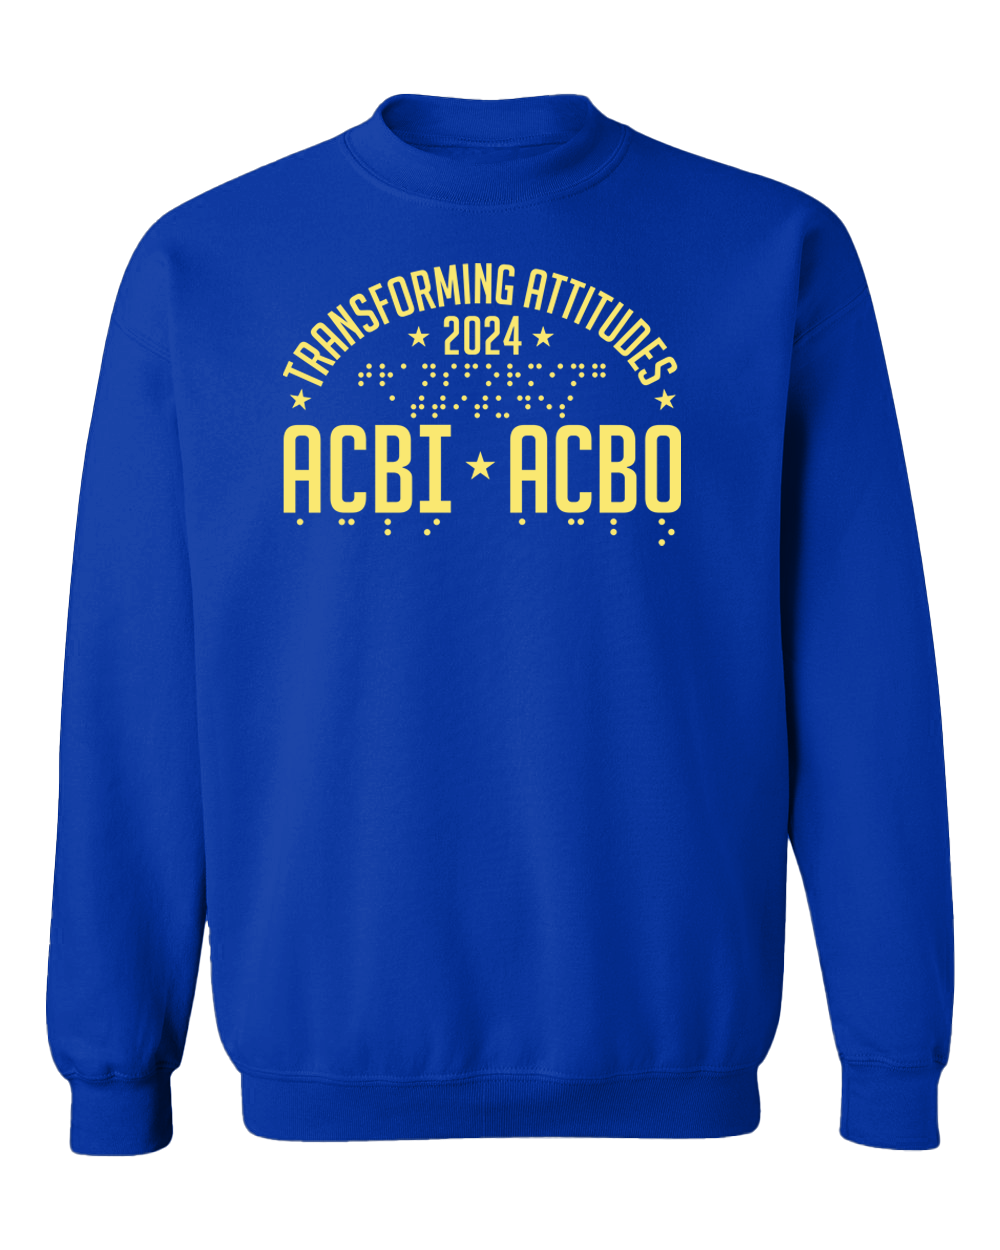 ACBI-ACBO 2024 Crew Sweatshirt - Royal Blue - Shipped to your home